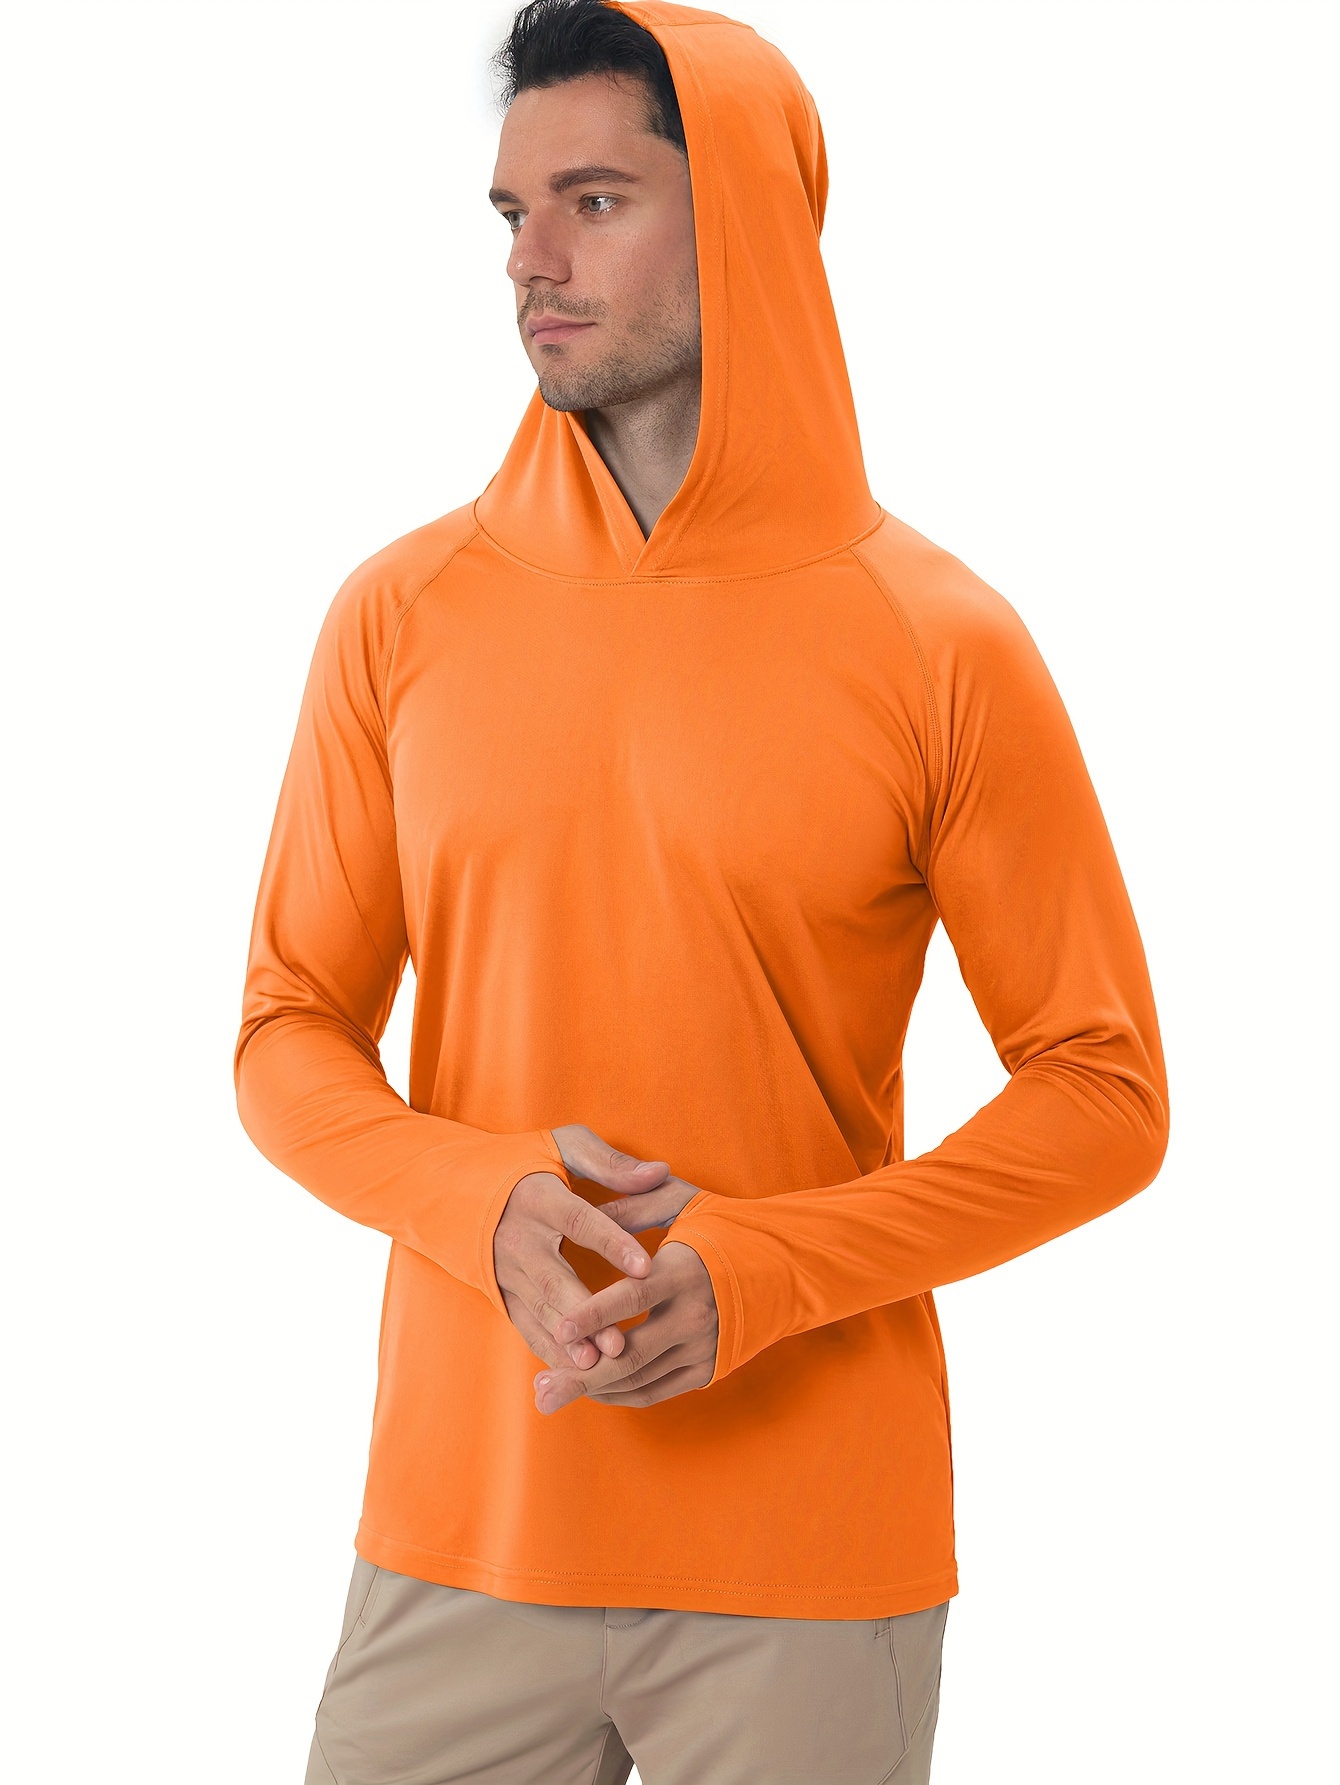 FAS Pro Men's UPF 50+ Sun Protection Hoodie Shirt Long Sleeve Khaki -  FishAndSave